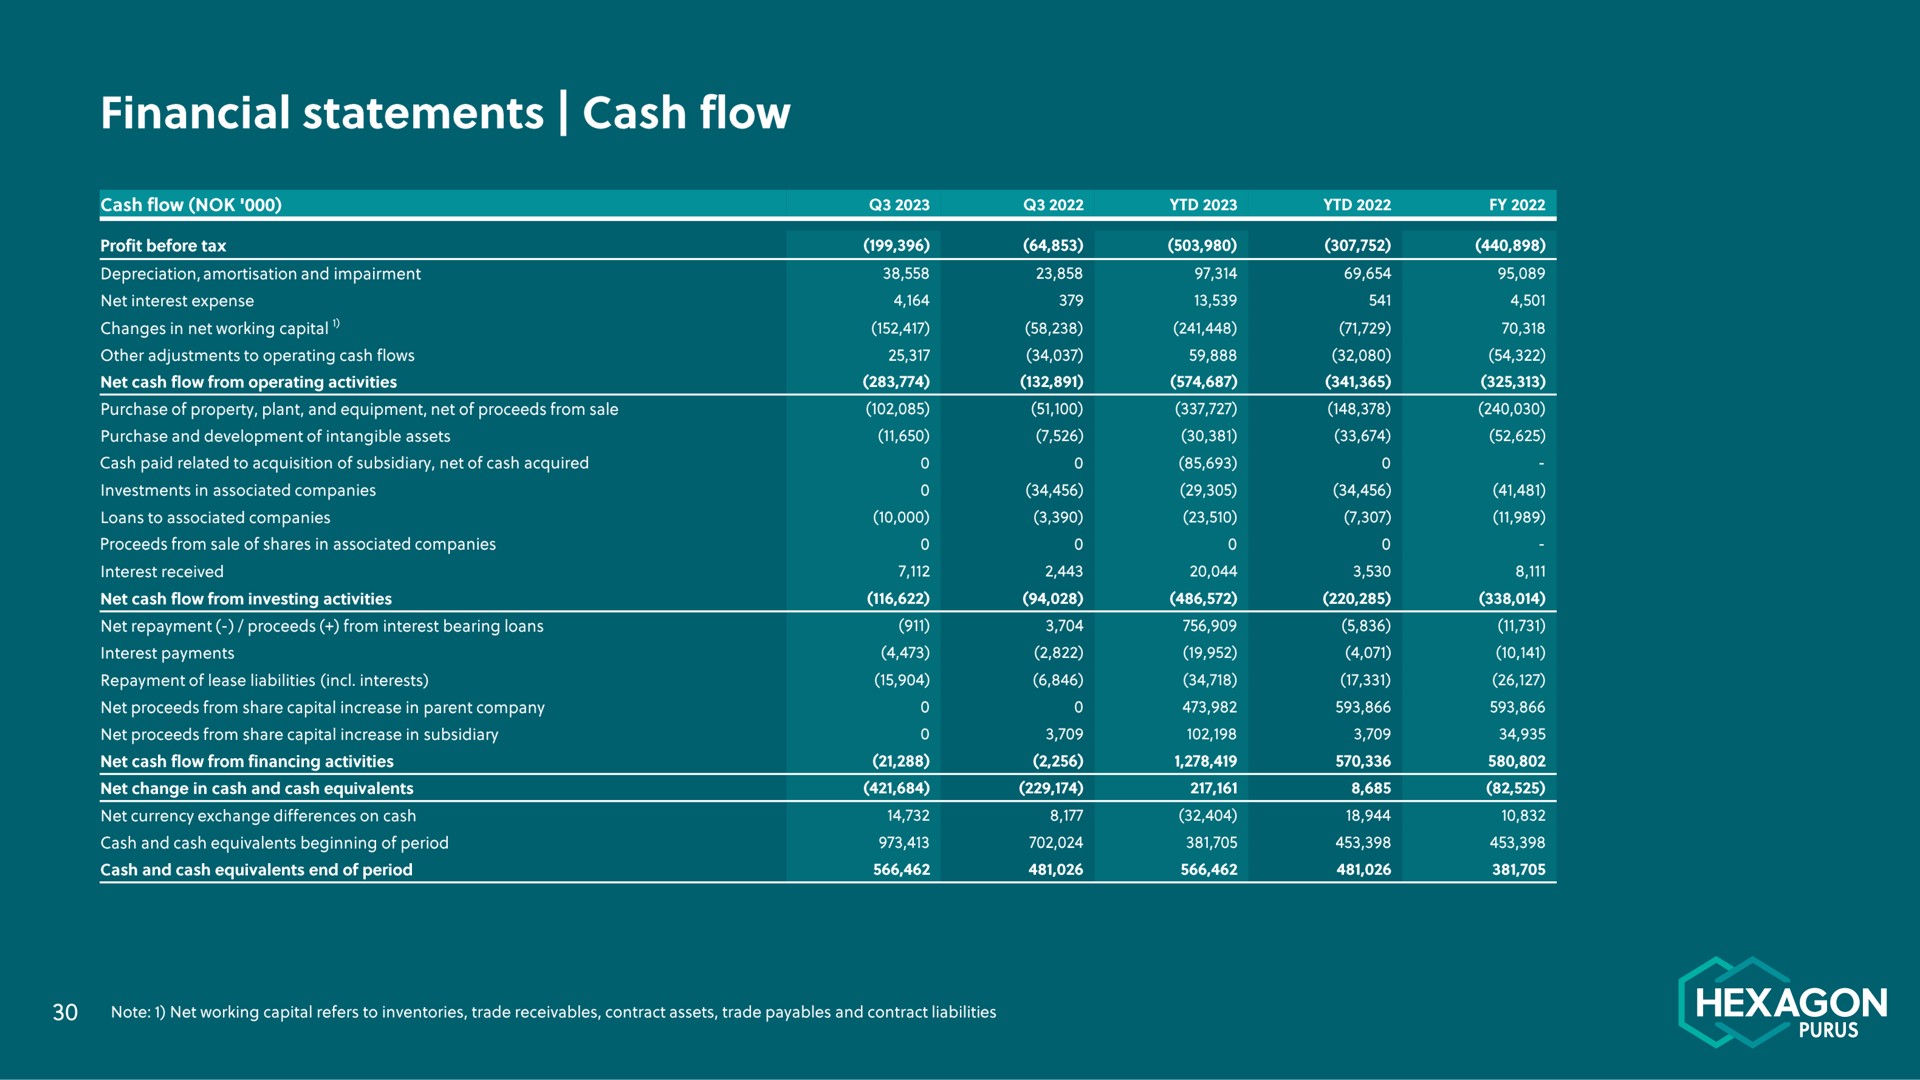 financial statements cash flow hexagon | Hexagon Purus